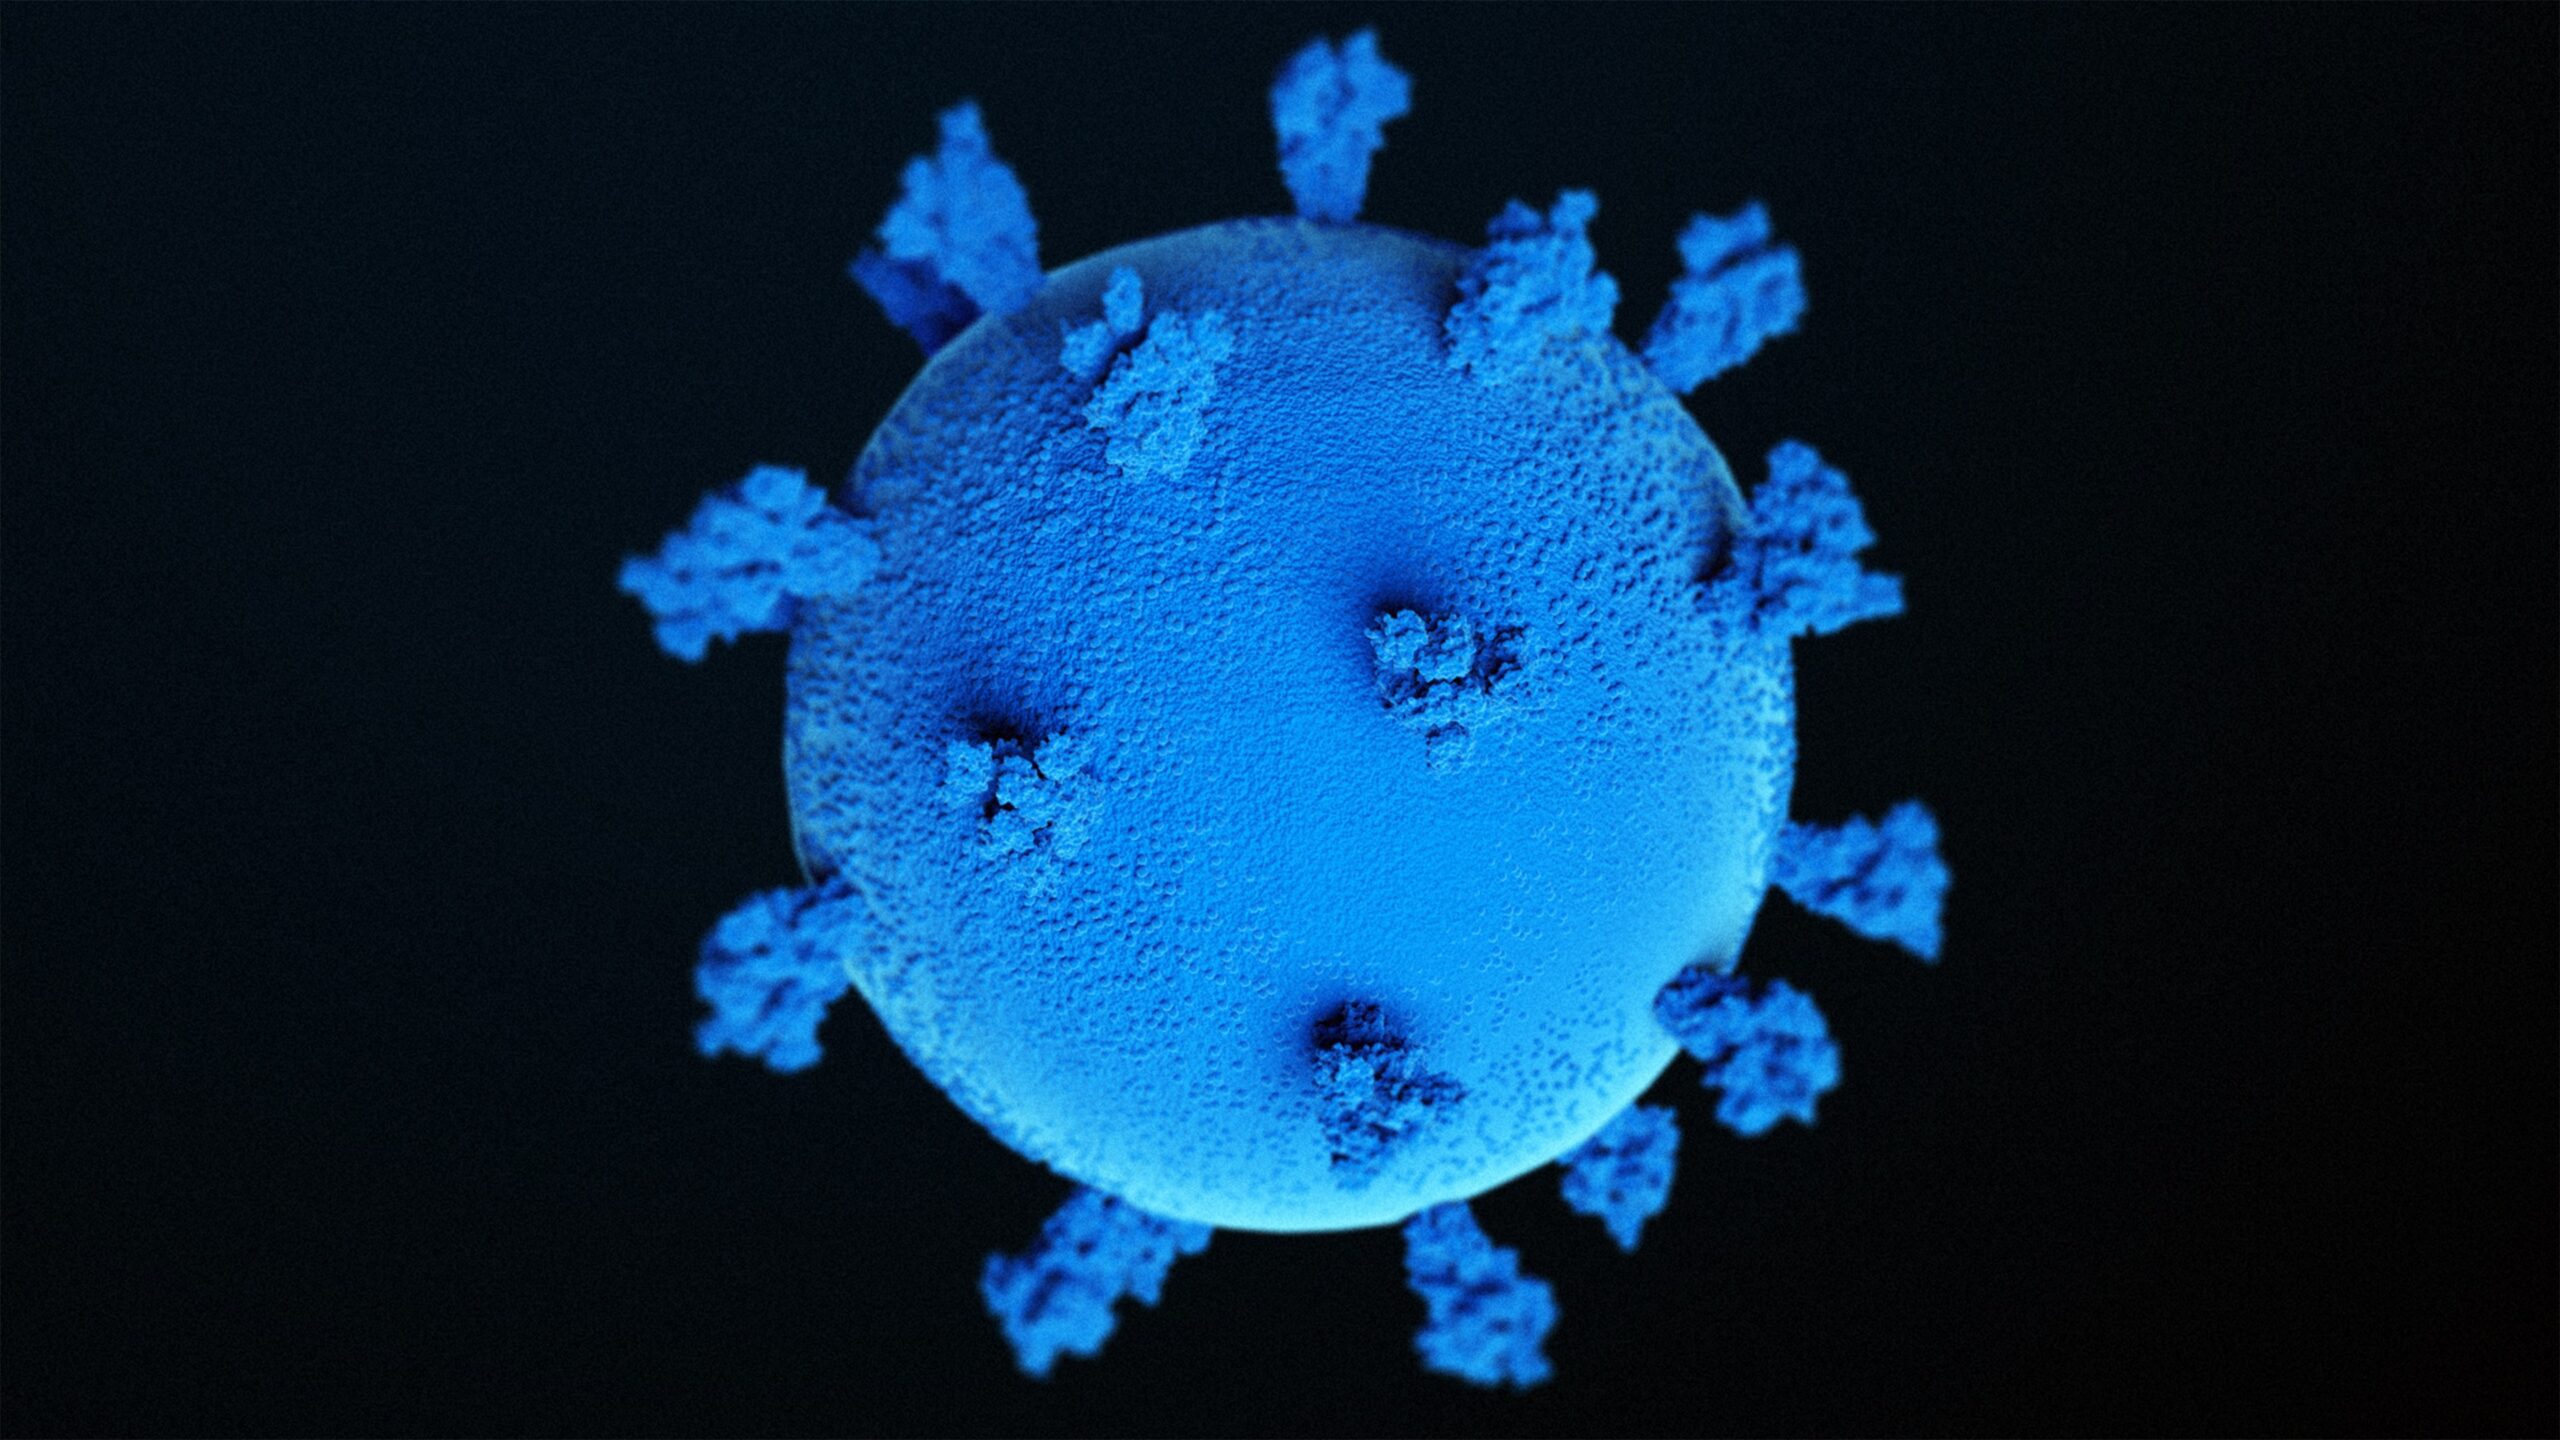 Blastoids mimic IVF-derived blastocysts when grown in a 3D environment